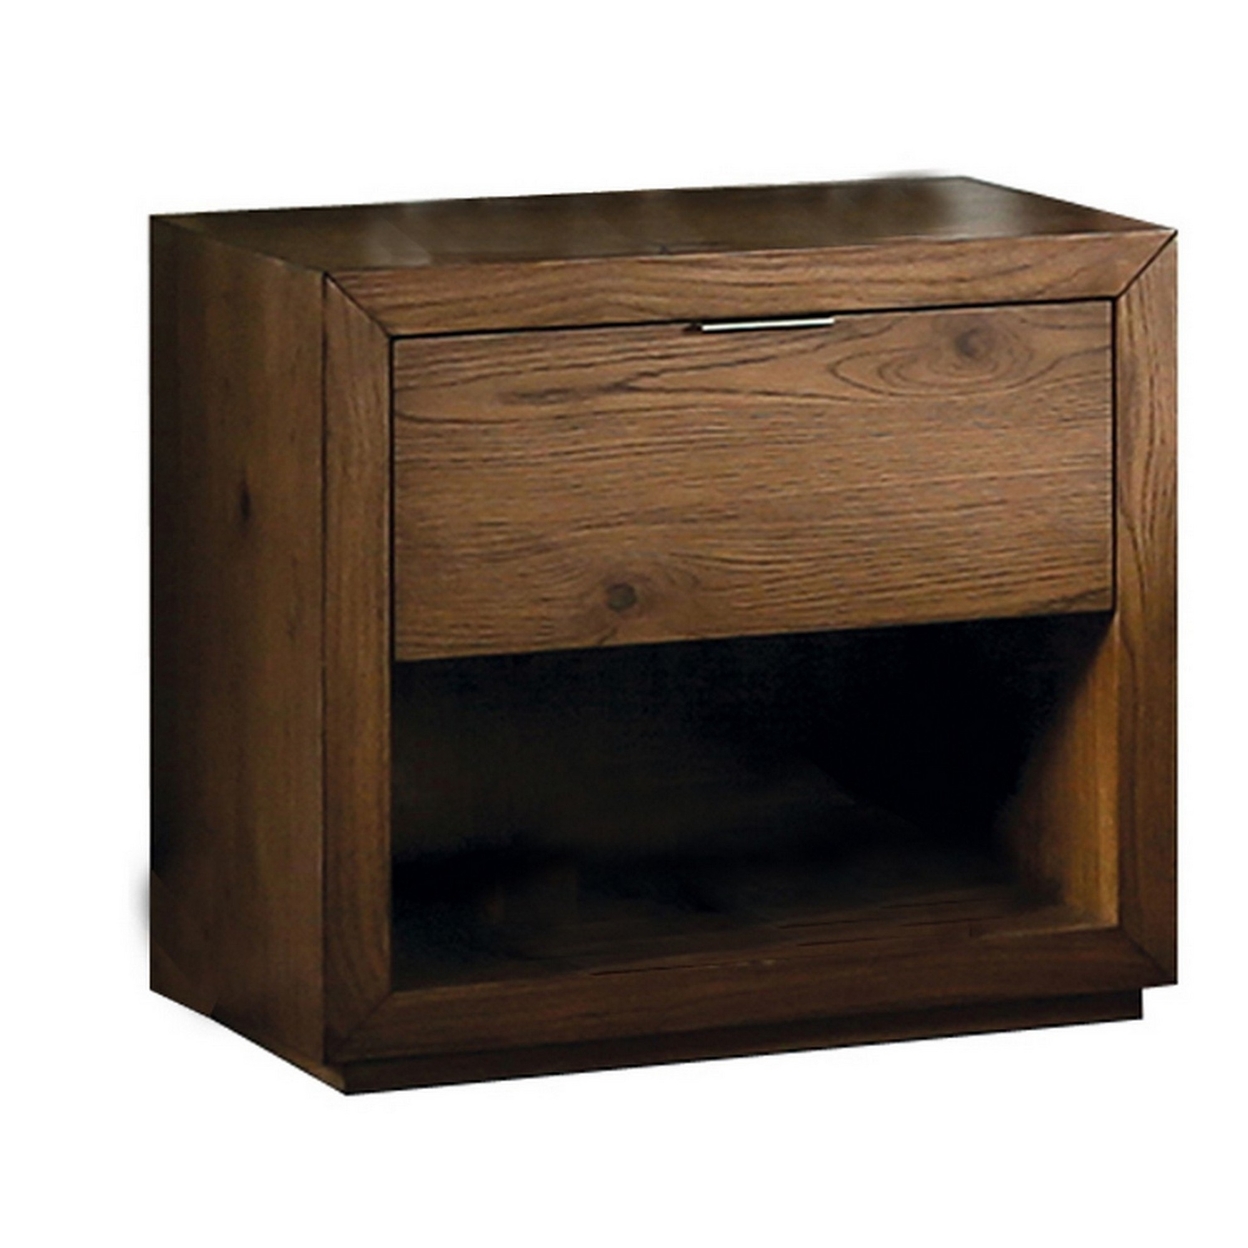 Lier 26 Inch Nightstand, Walnut Brown Wood, Single Drawer, Open Shelf - Saltoro Sherpi